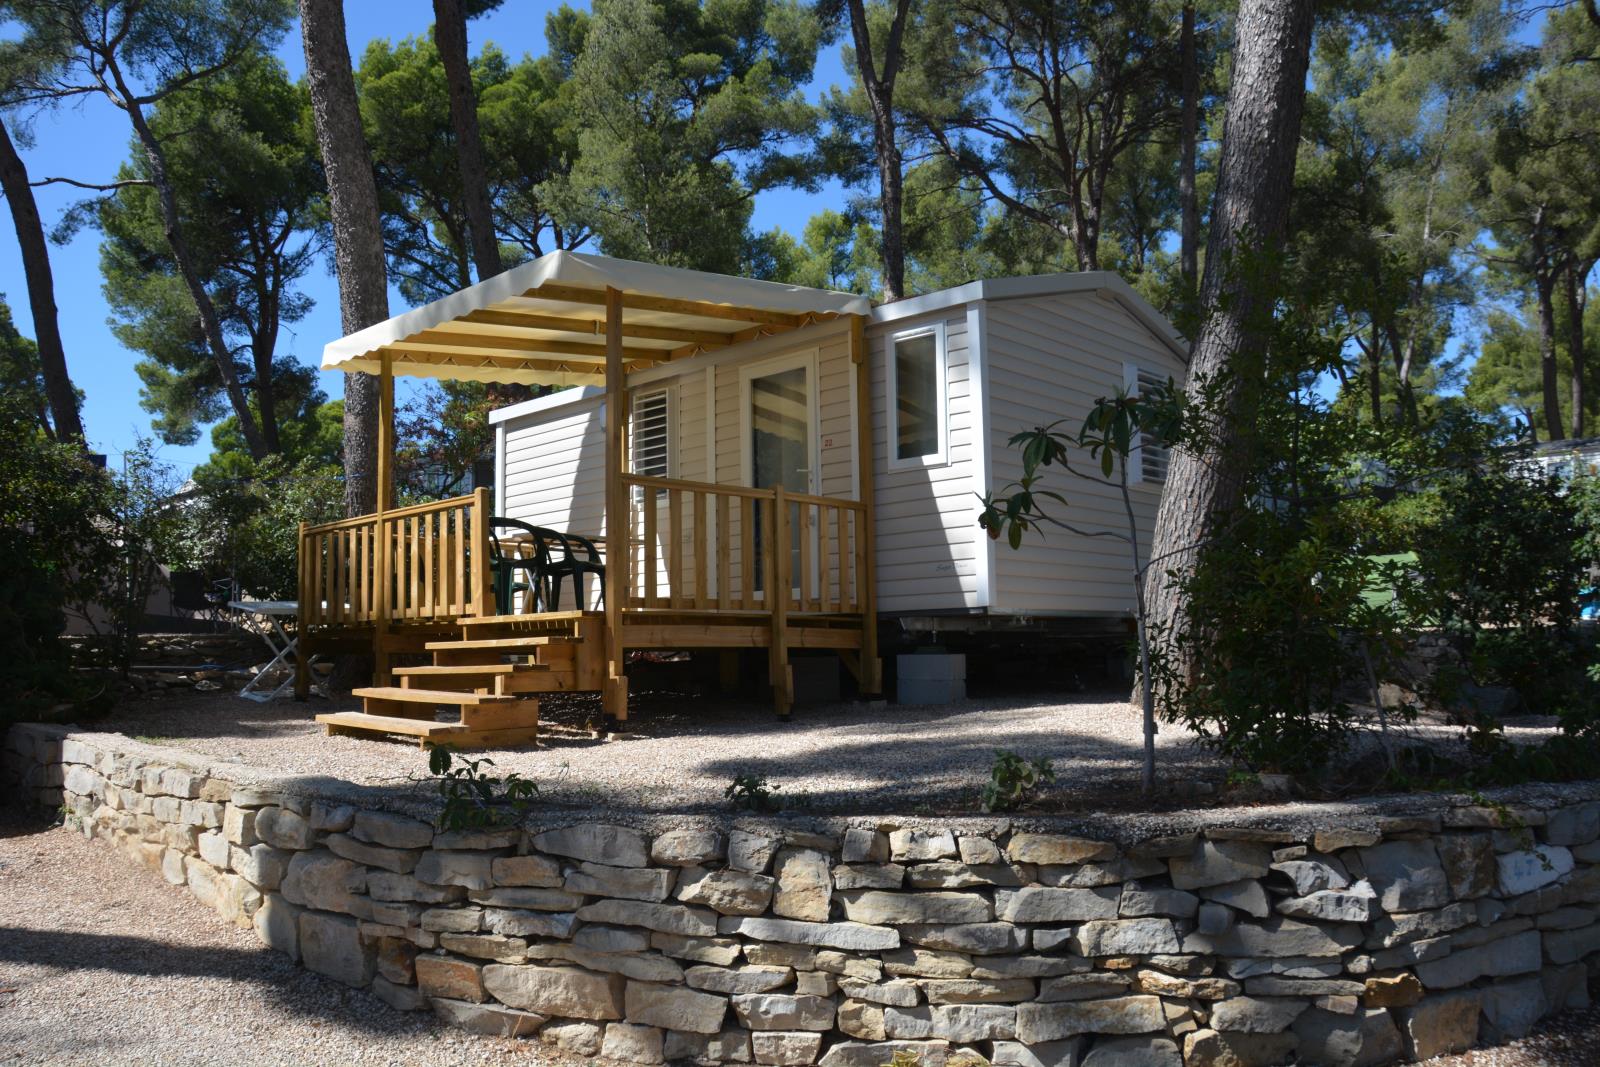 Location - Mobil Home Venus 2 Chambres (24M2) + Terrasse Semi Couverte + Climatisation + Télévision - Camping Ceyreste